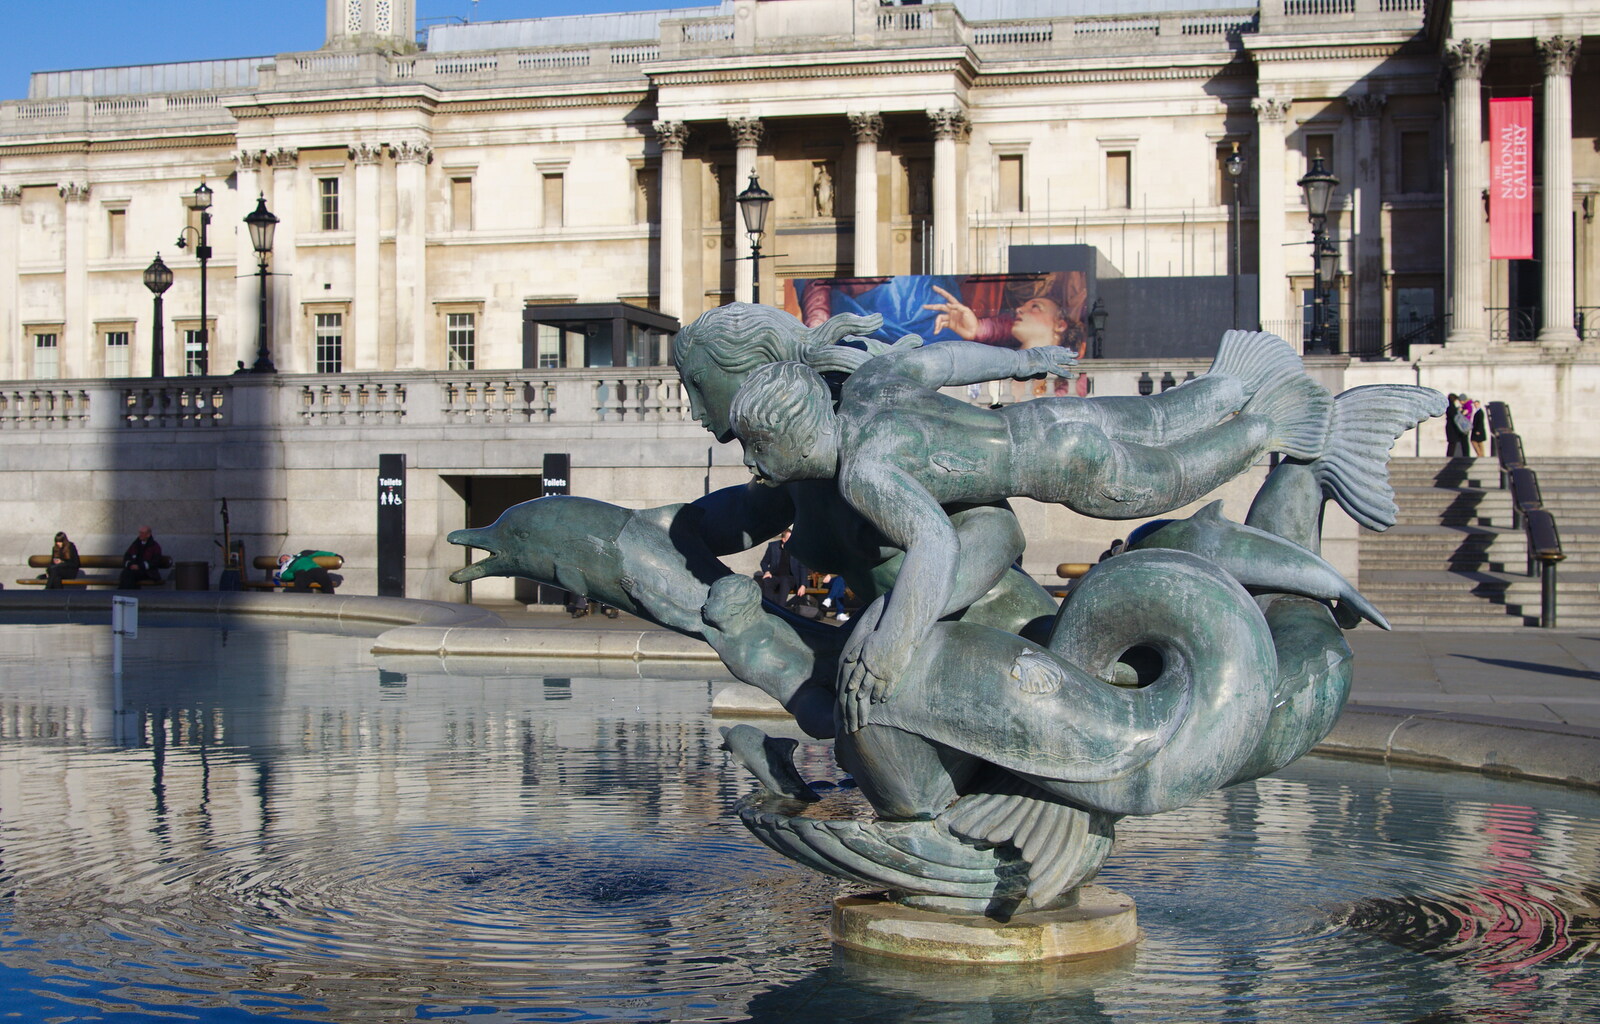 Trafalgar statues from SwiftKey Innovation, The Hub, Westminster, London - 21st February 2014